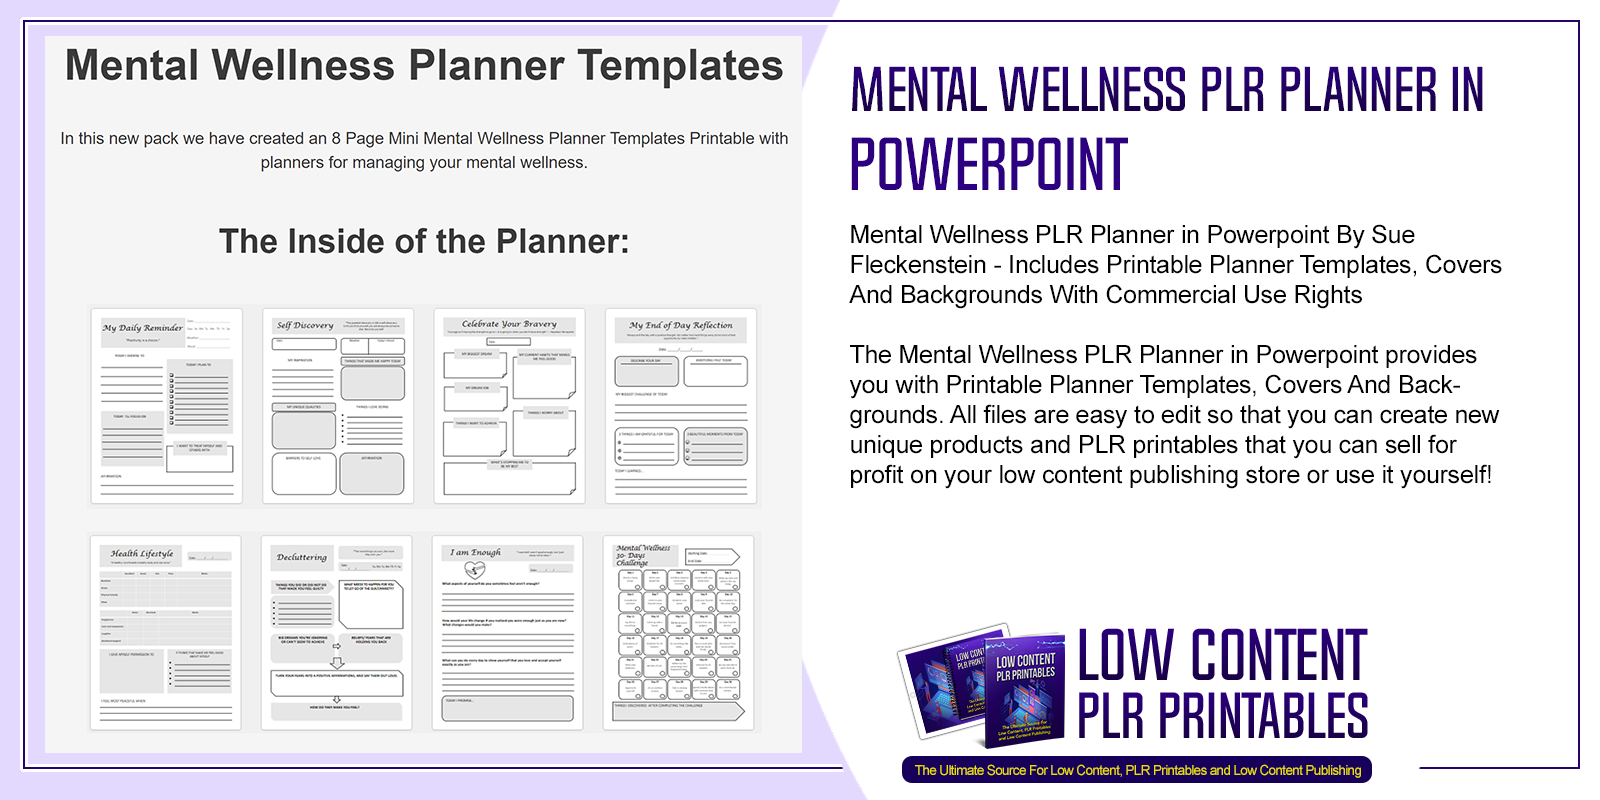 Mental Wellness PLR Planner in Powerpoint